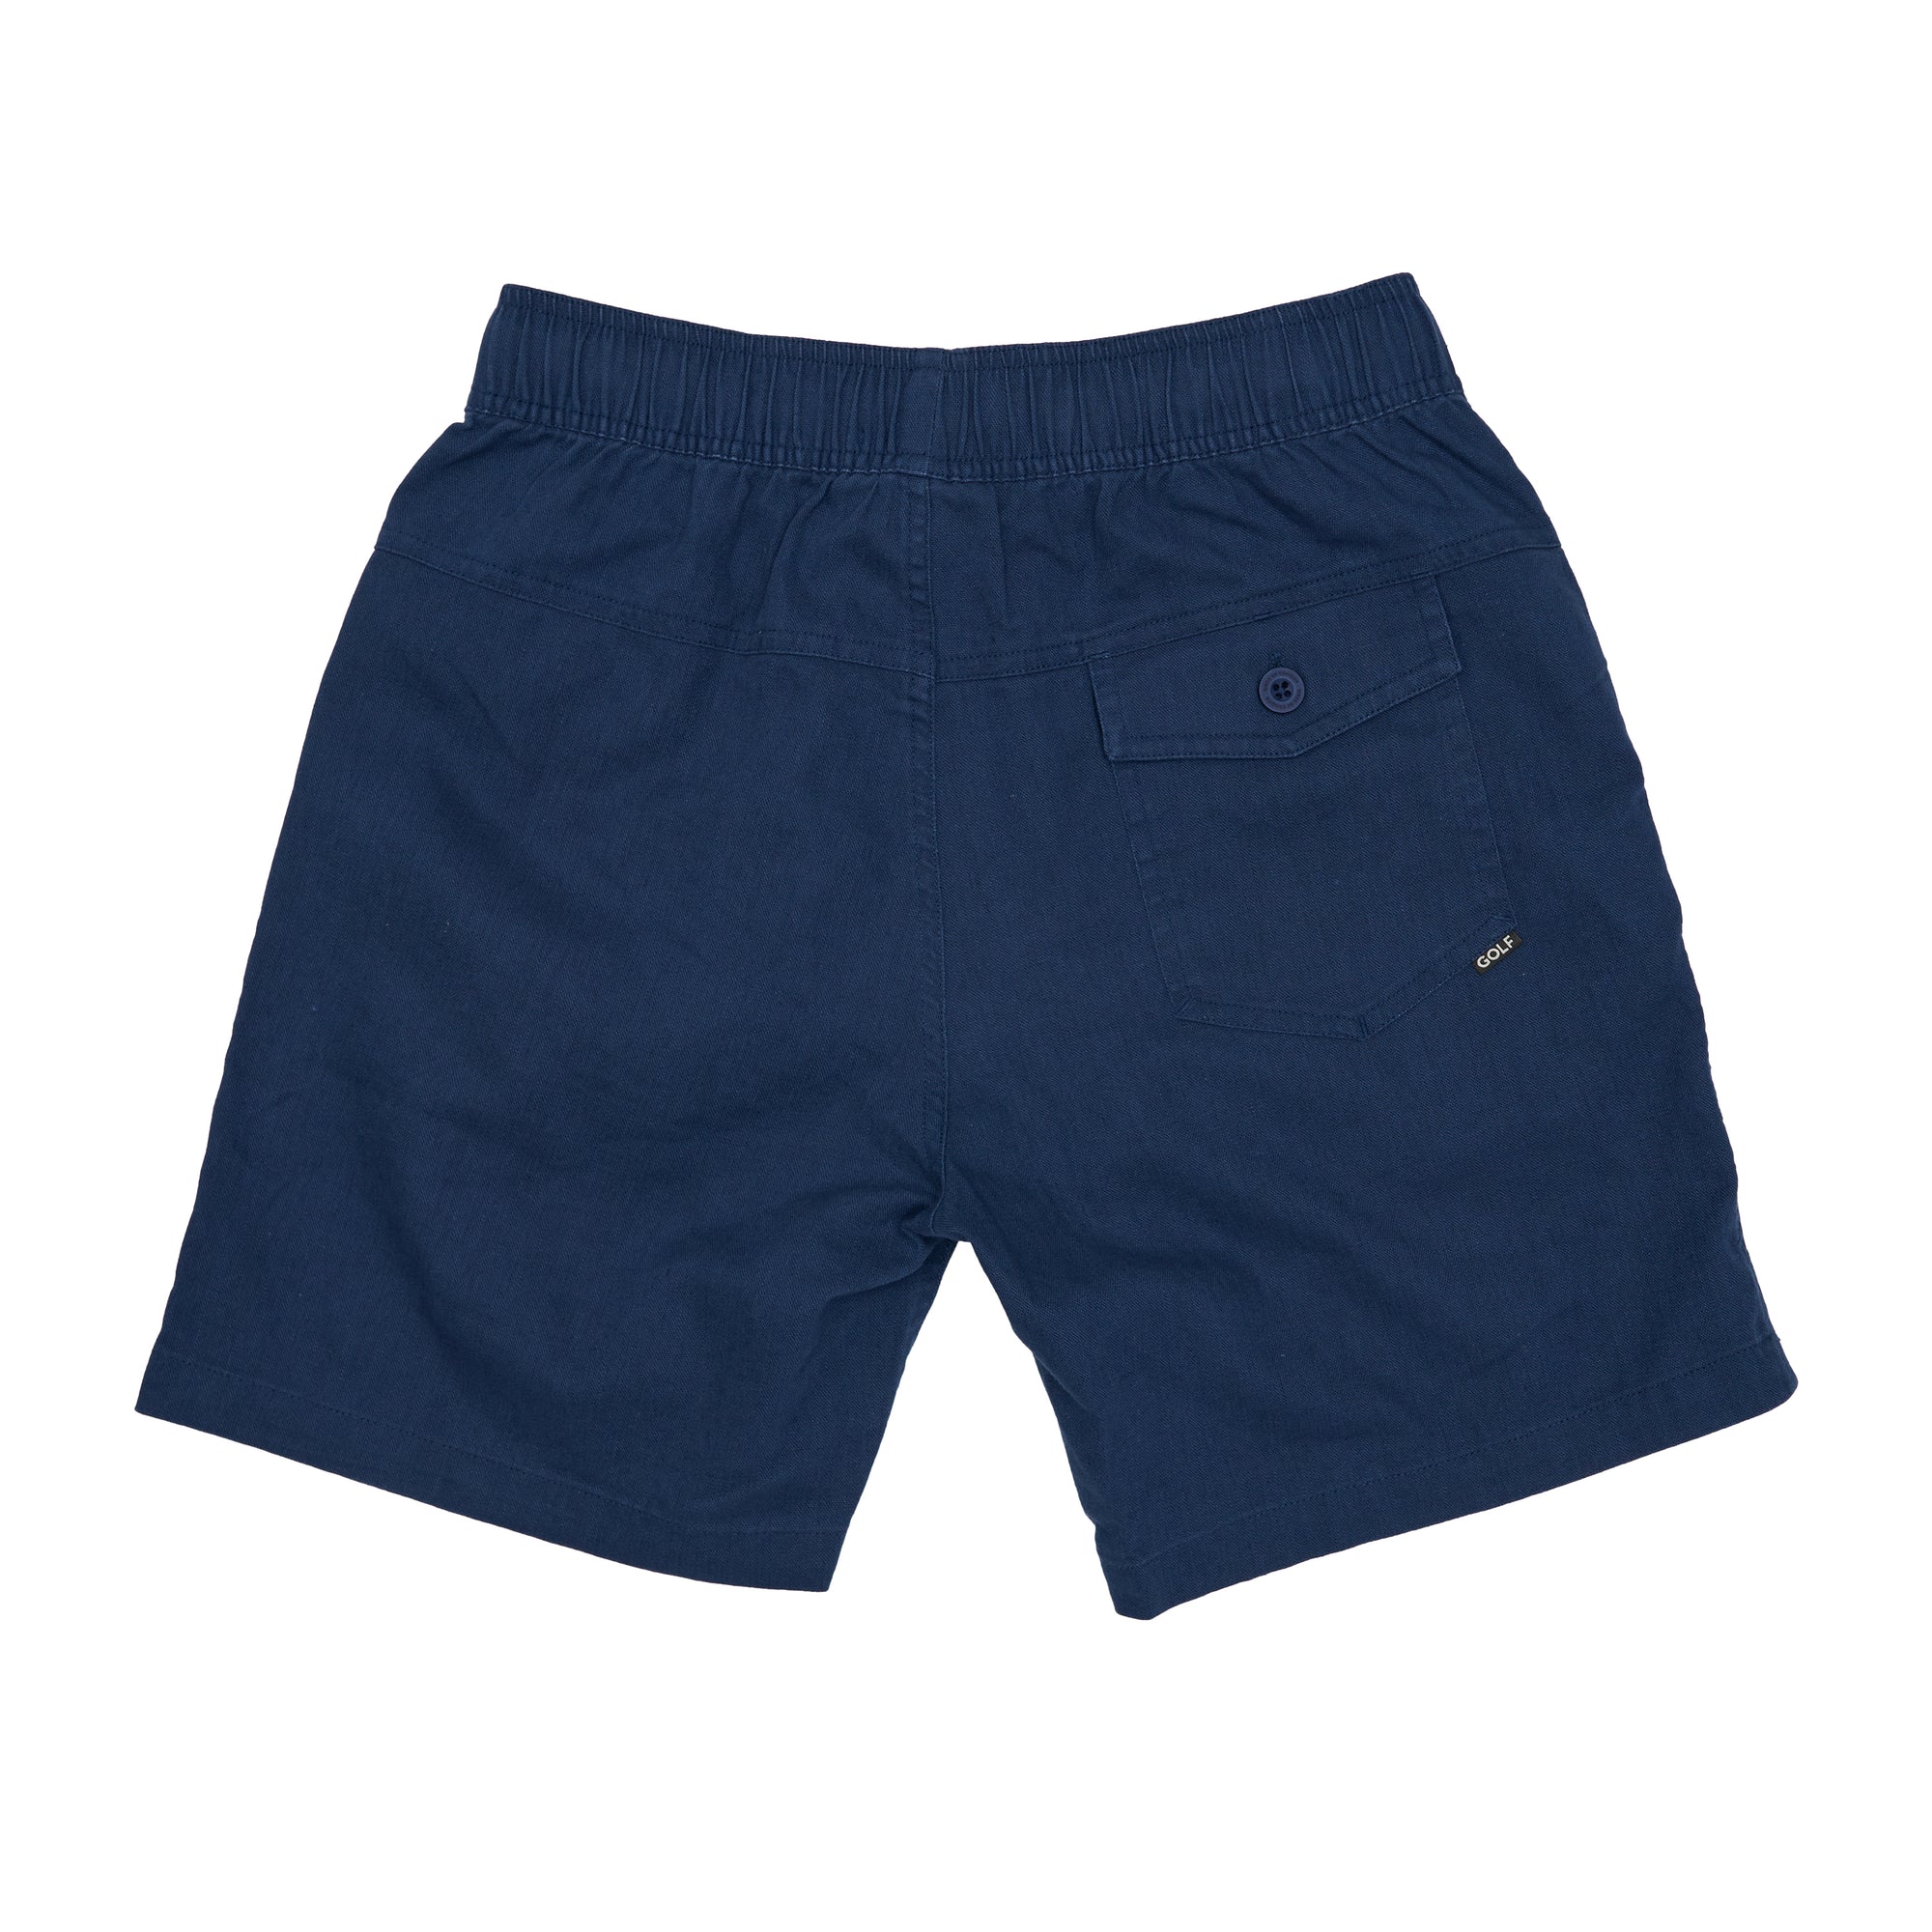 birds-of-condor-navy-blue-cotton-linen-golf-walk-shorts-front